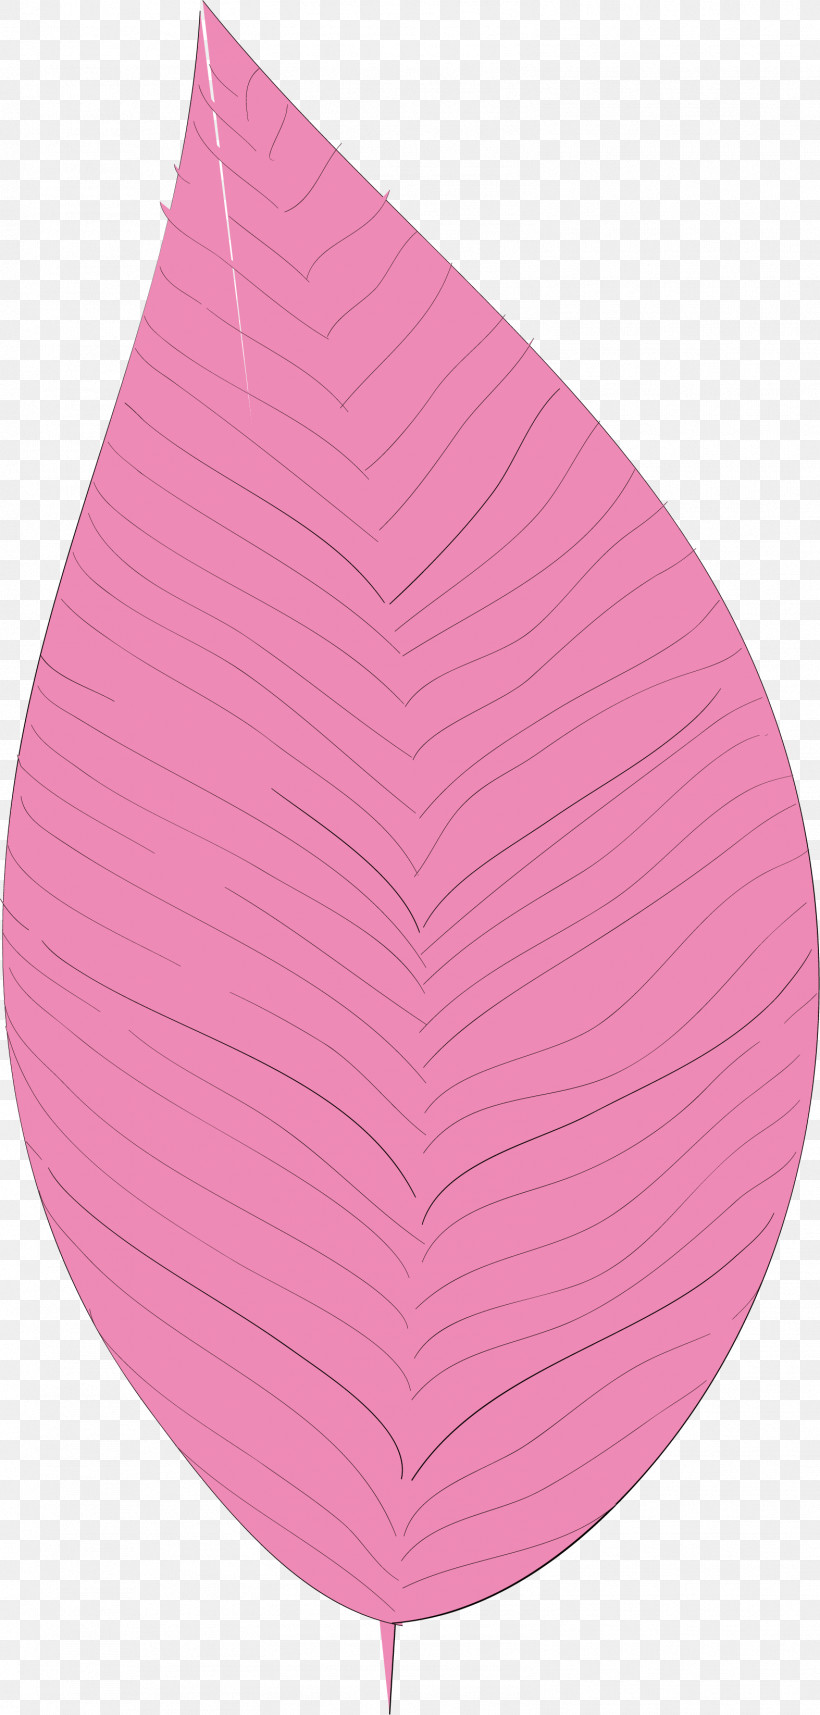 Simple Leaf Simple Leaf Drawing Simple Leaf Outline, PNG, 1574x3292px, Simple Leaf, Biology, Leaf, Pink M, Plant Structure Download Free